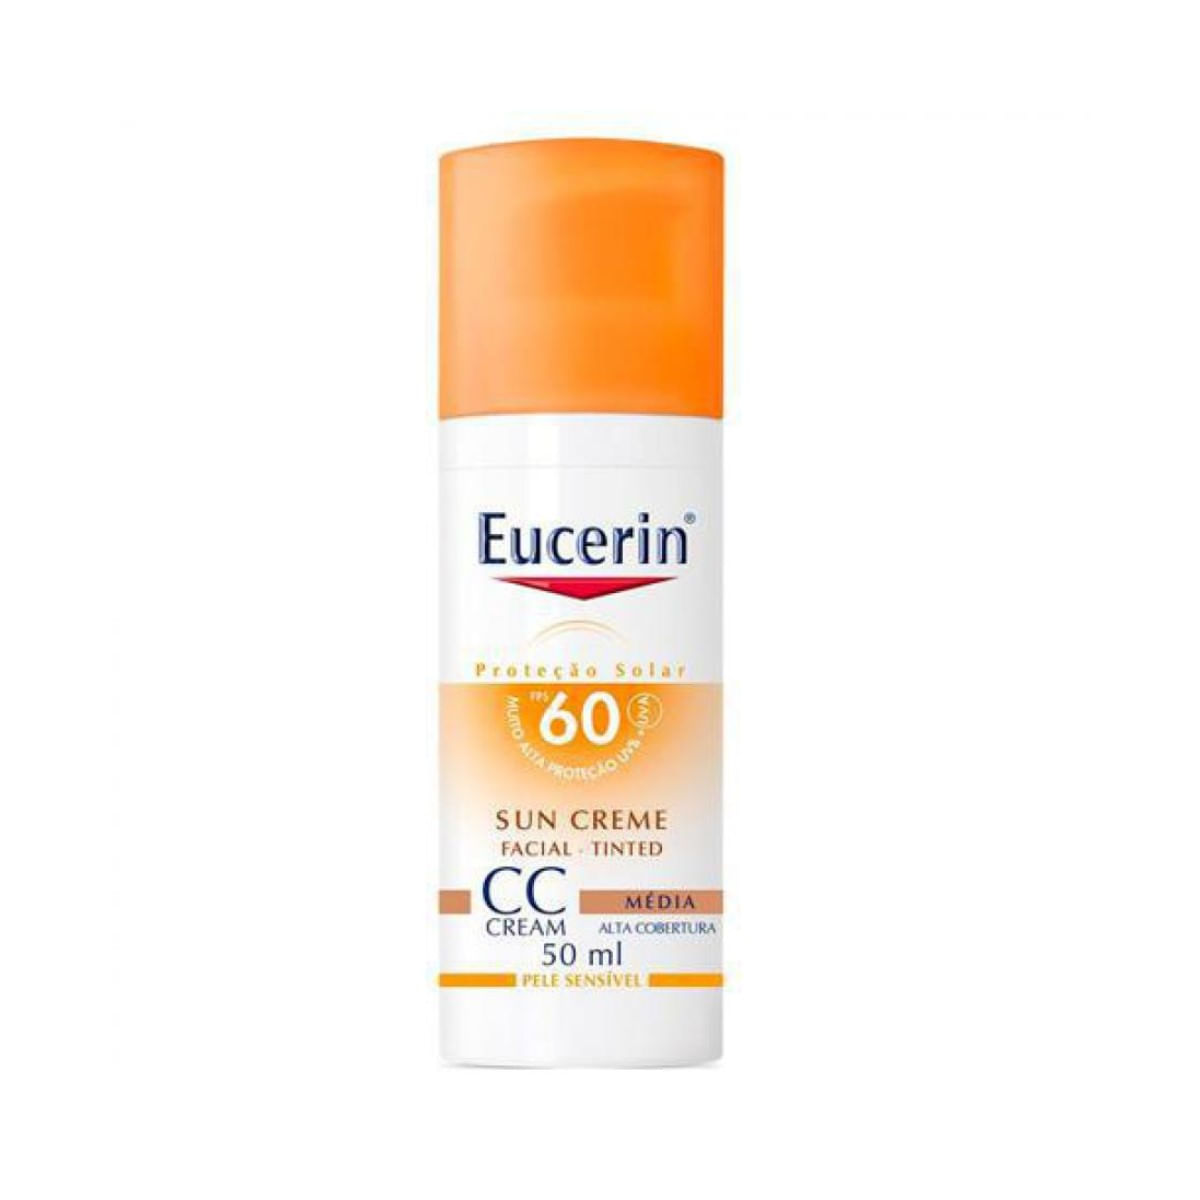 eucerin-cc-cream-tinted-medio-fps60-1.jpg